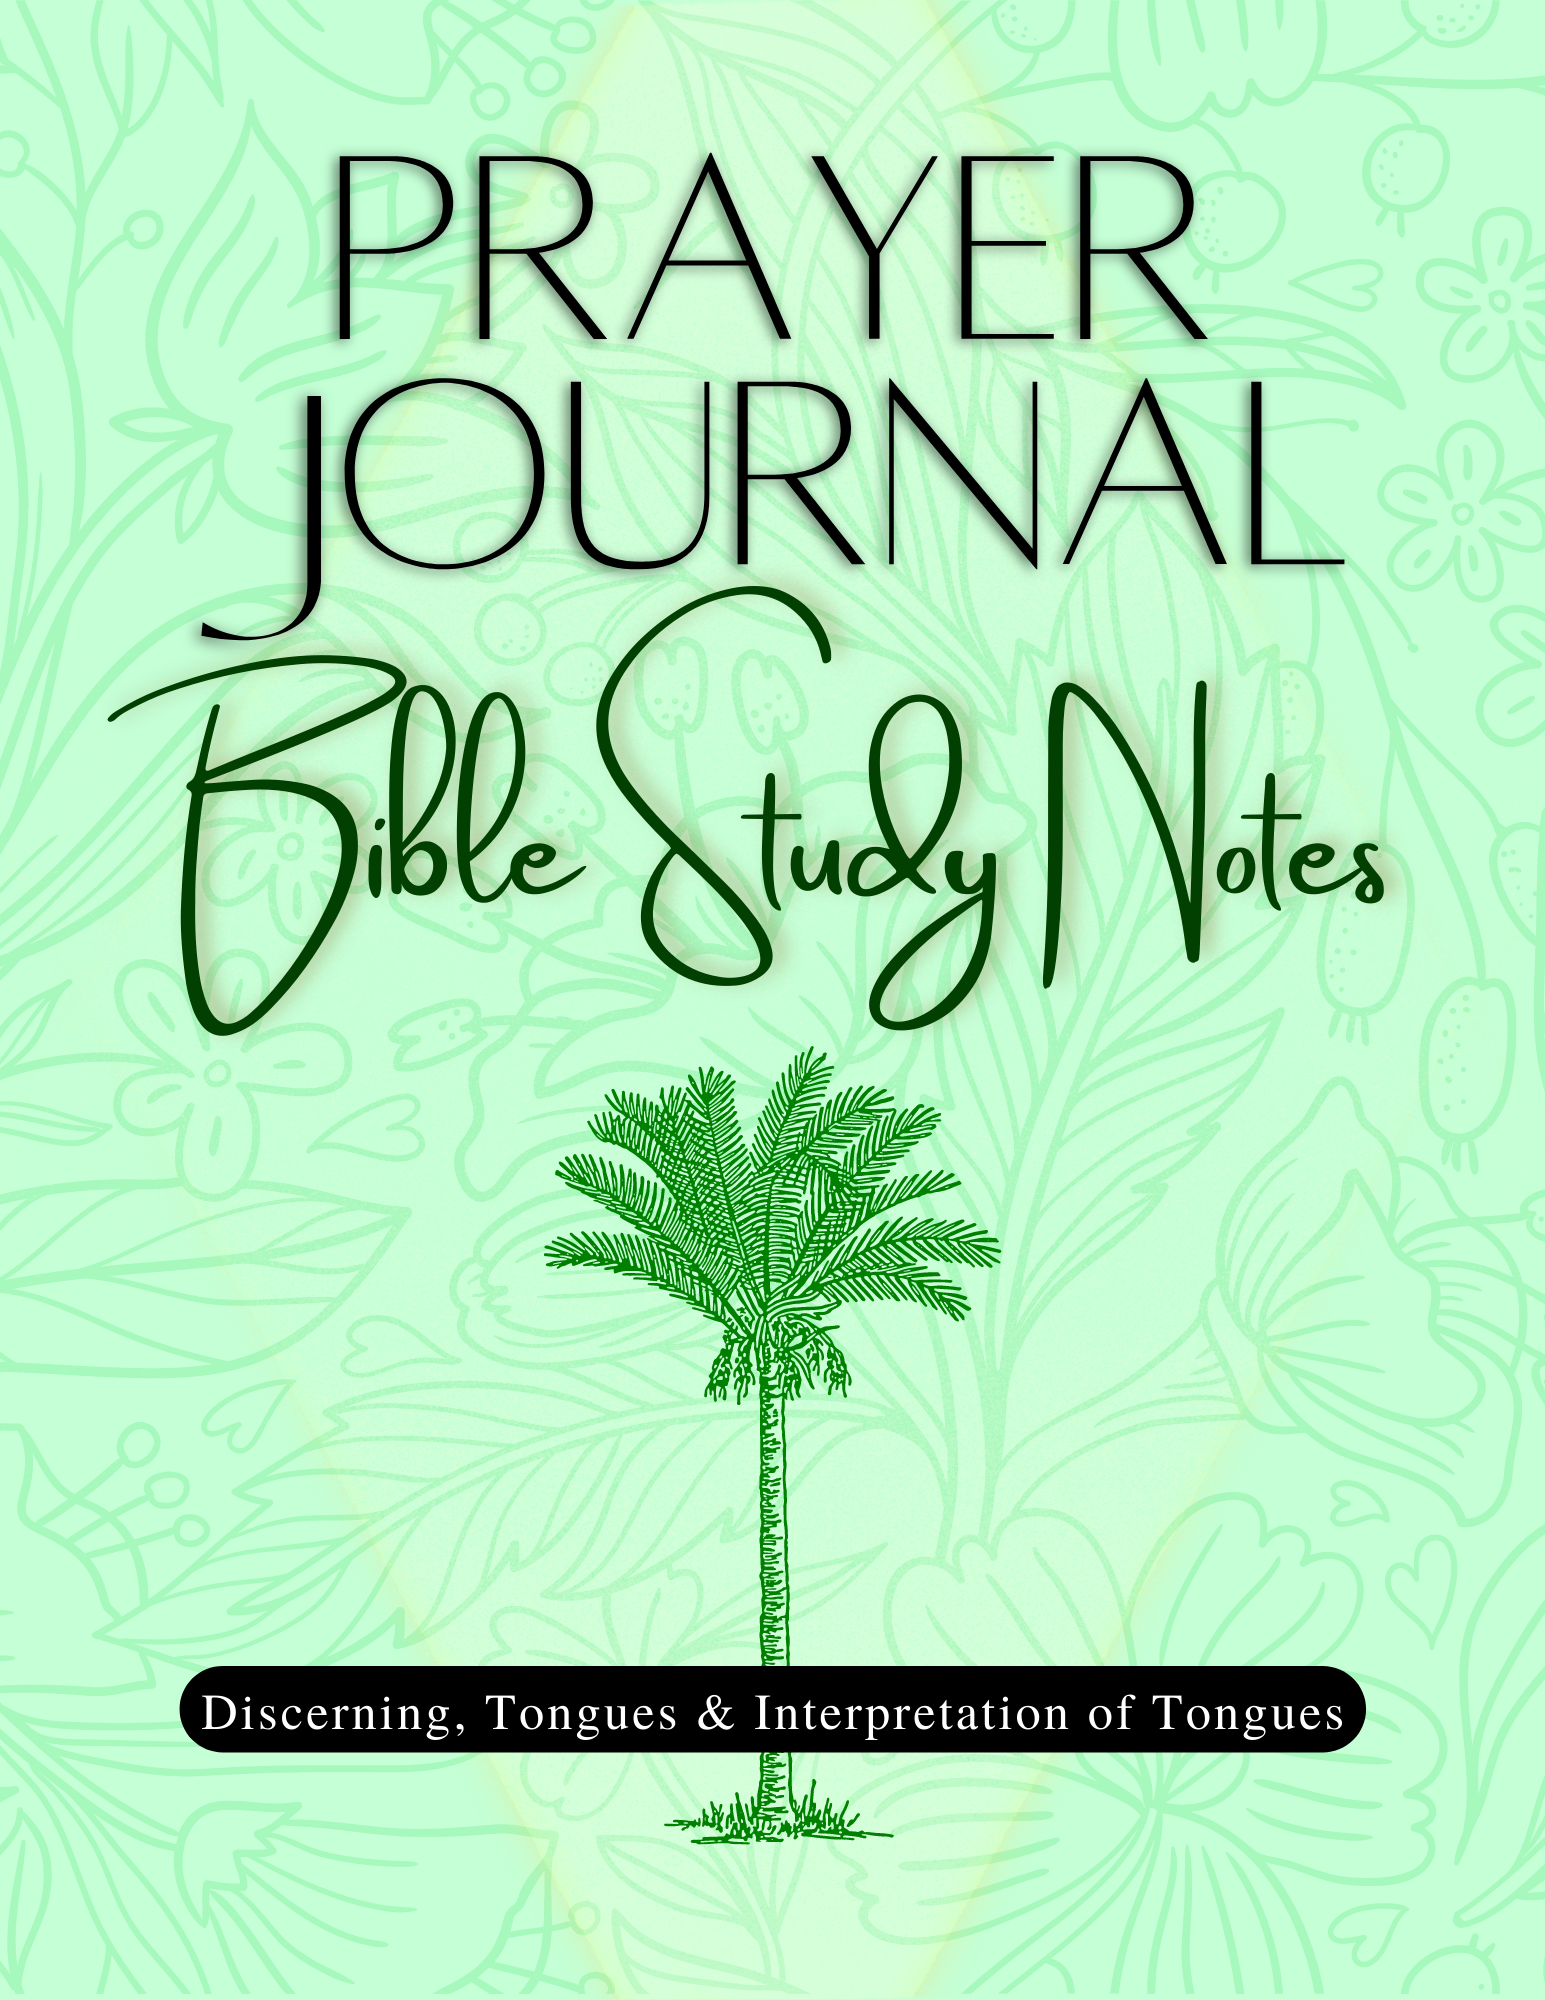 Prayer Journal Bible Study Notes: Discerning, Tongues & Interpretation of Tongues